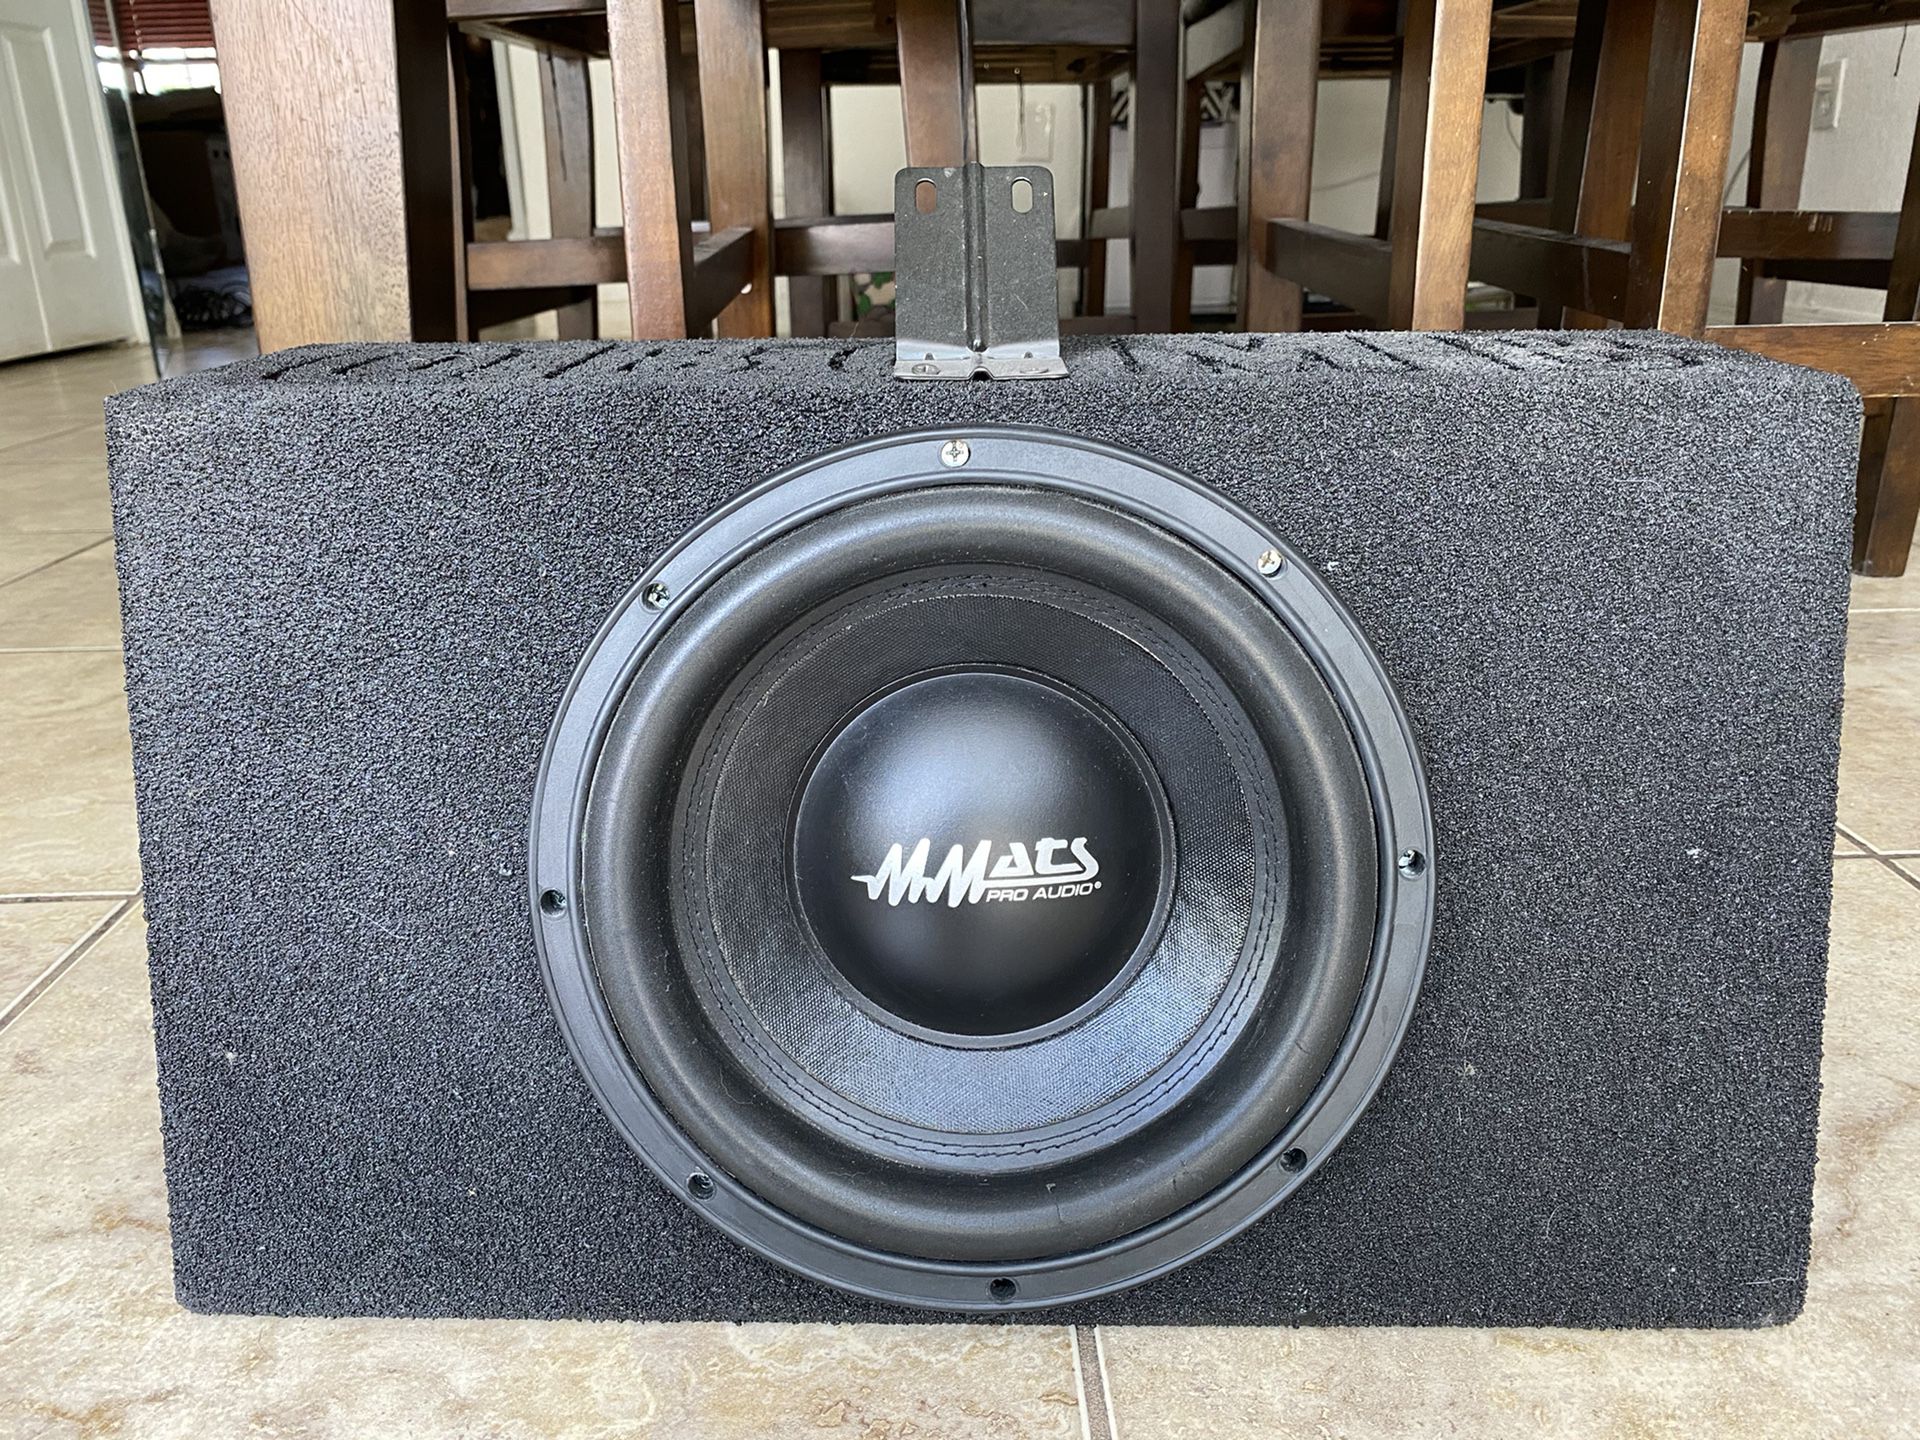 Mmats Pro Audio P1 Series 10” Subwoofer and QBomb Sealed Box